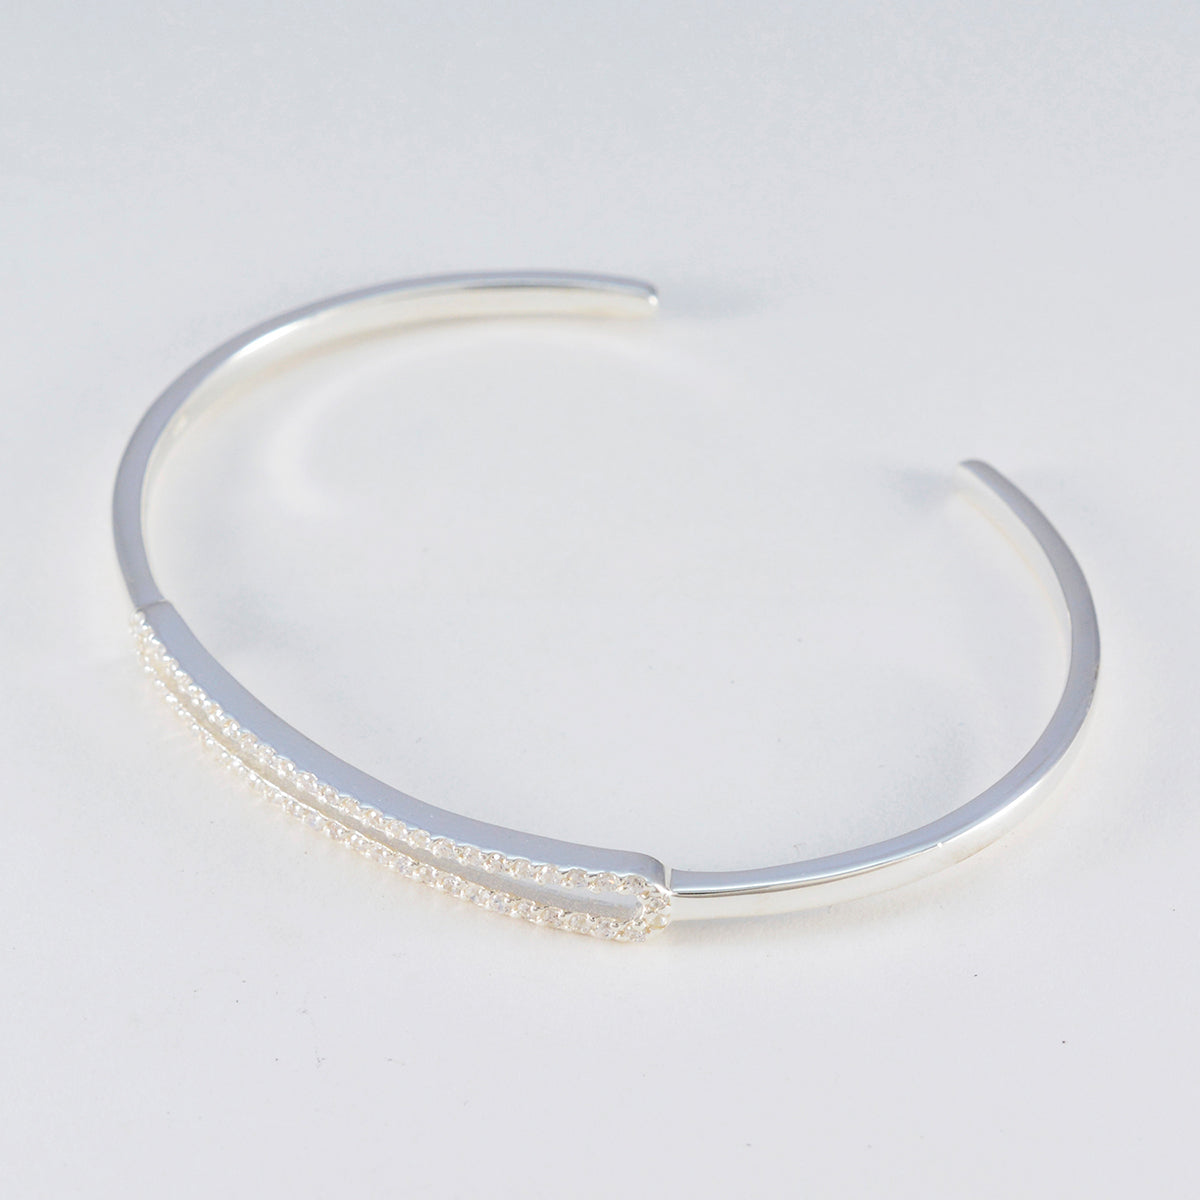 riyo bellissimo braccialetto in argento sterling 925 per donna braccialetto con cz bianco braccialetto con castone braccialetto rigido misura l 6-8,5 pollici.